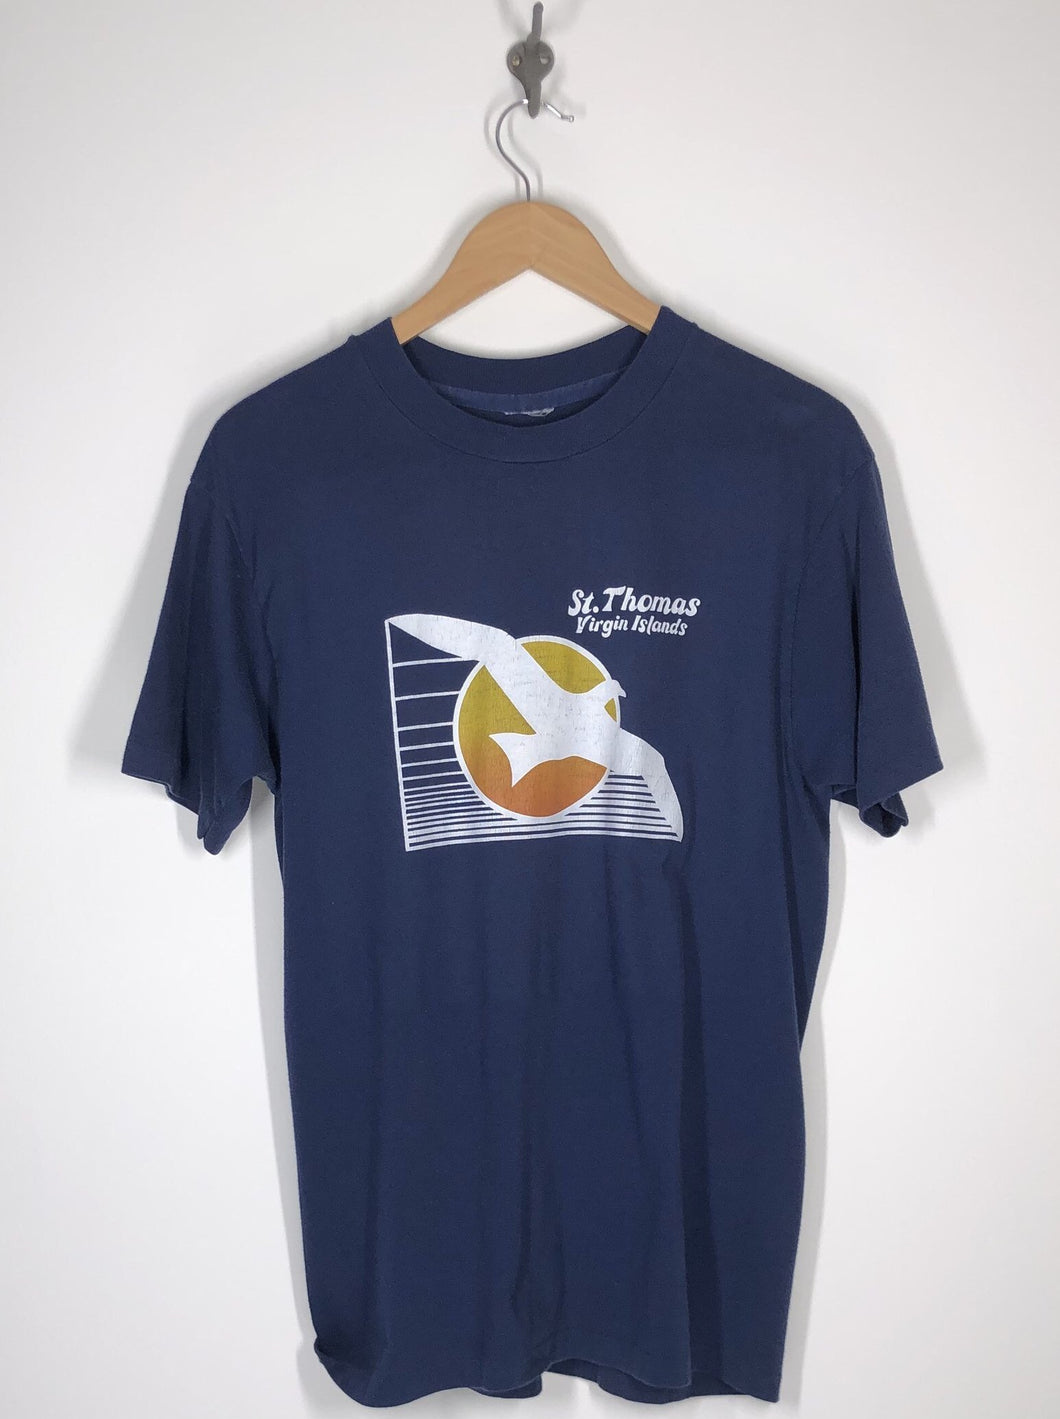 St. Thomas - Virgin Islands Souvenir Tourist T Shirt - M